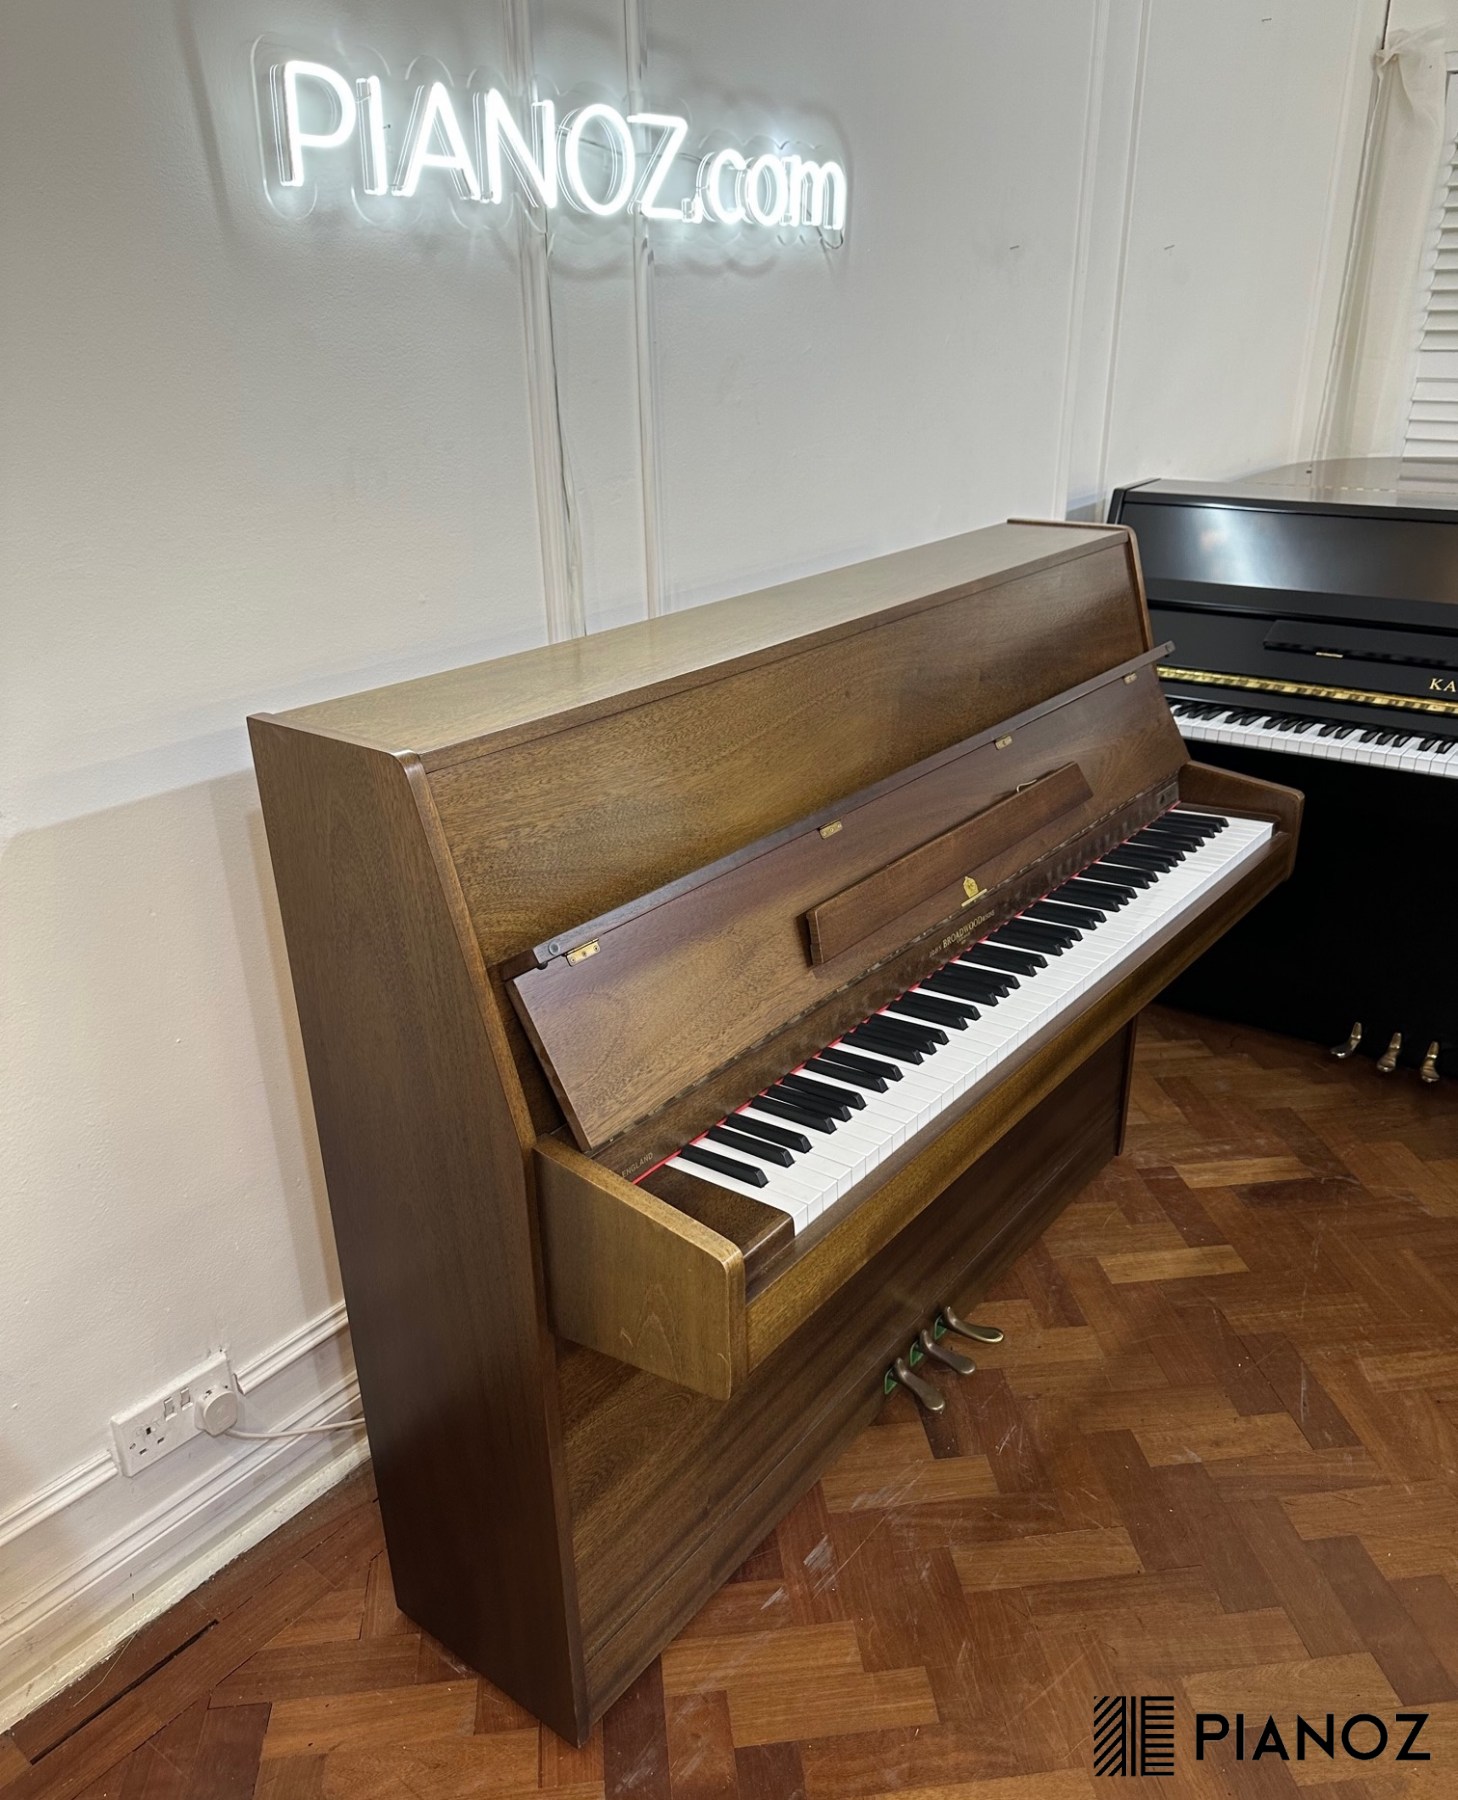 Broadwood 1999 Upright Piano piano for sale in UK